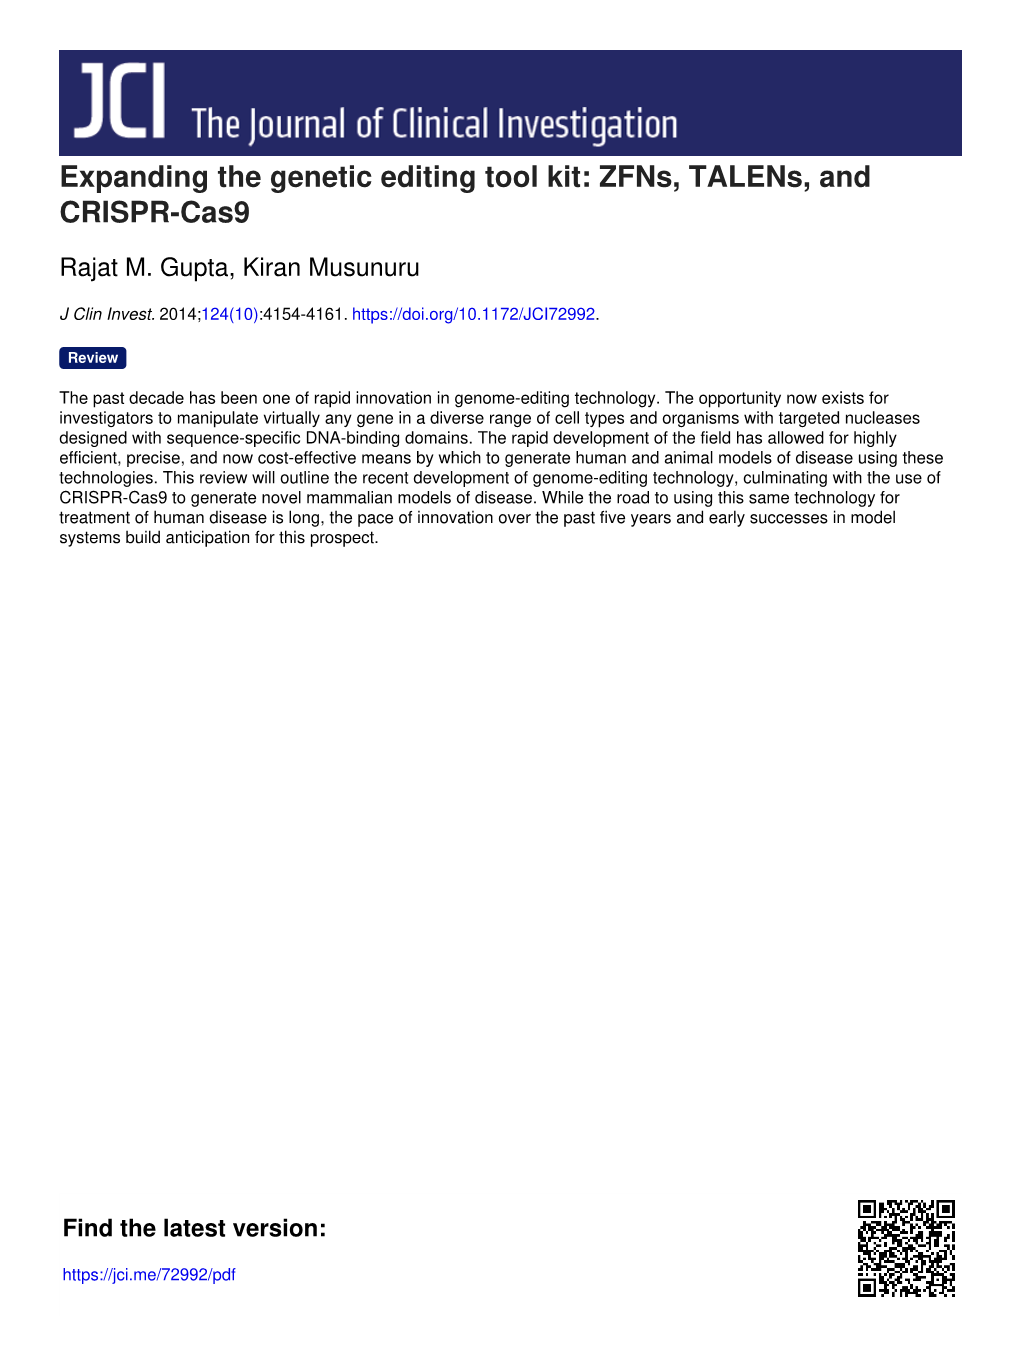 Zfns, Talens, and CRISPR-Cas9